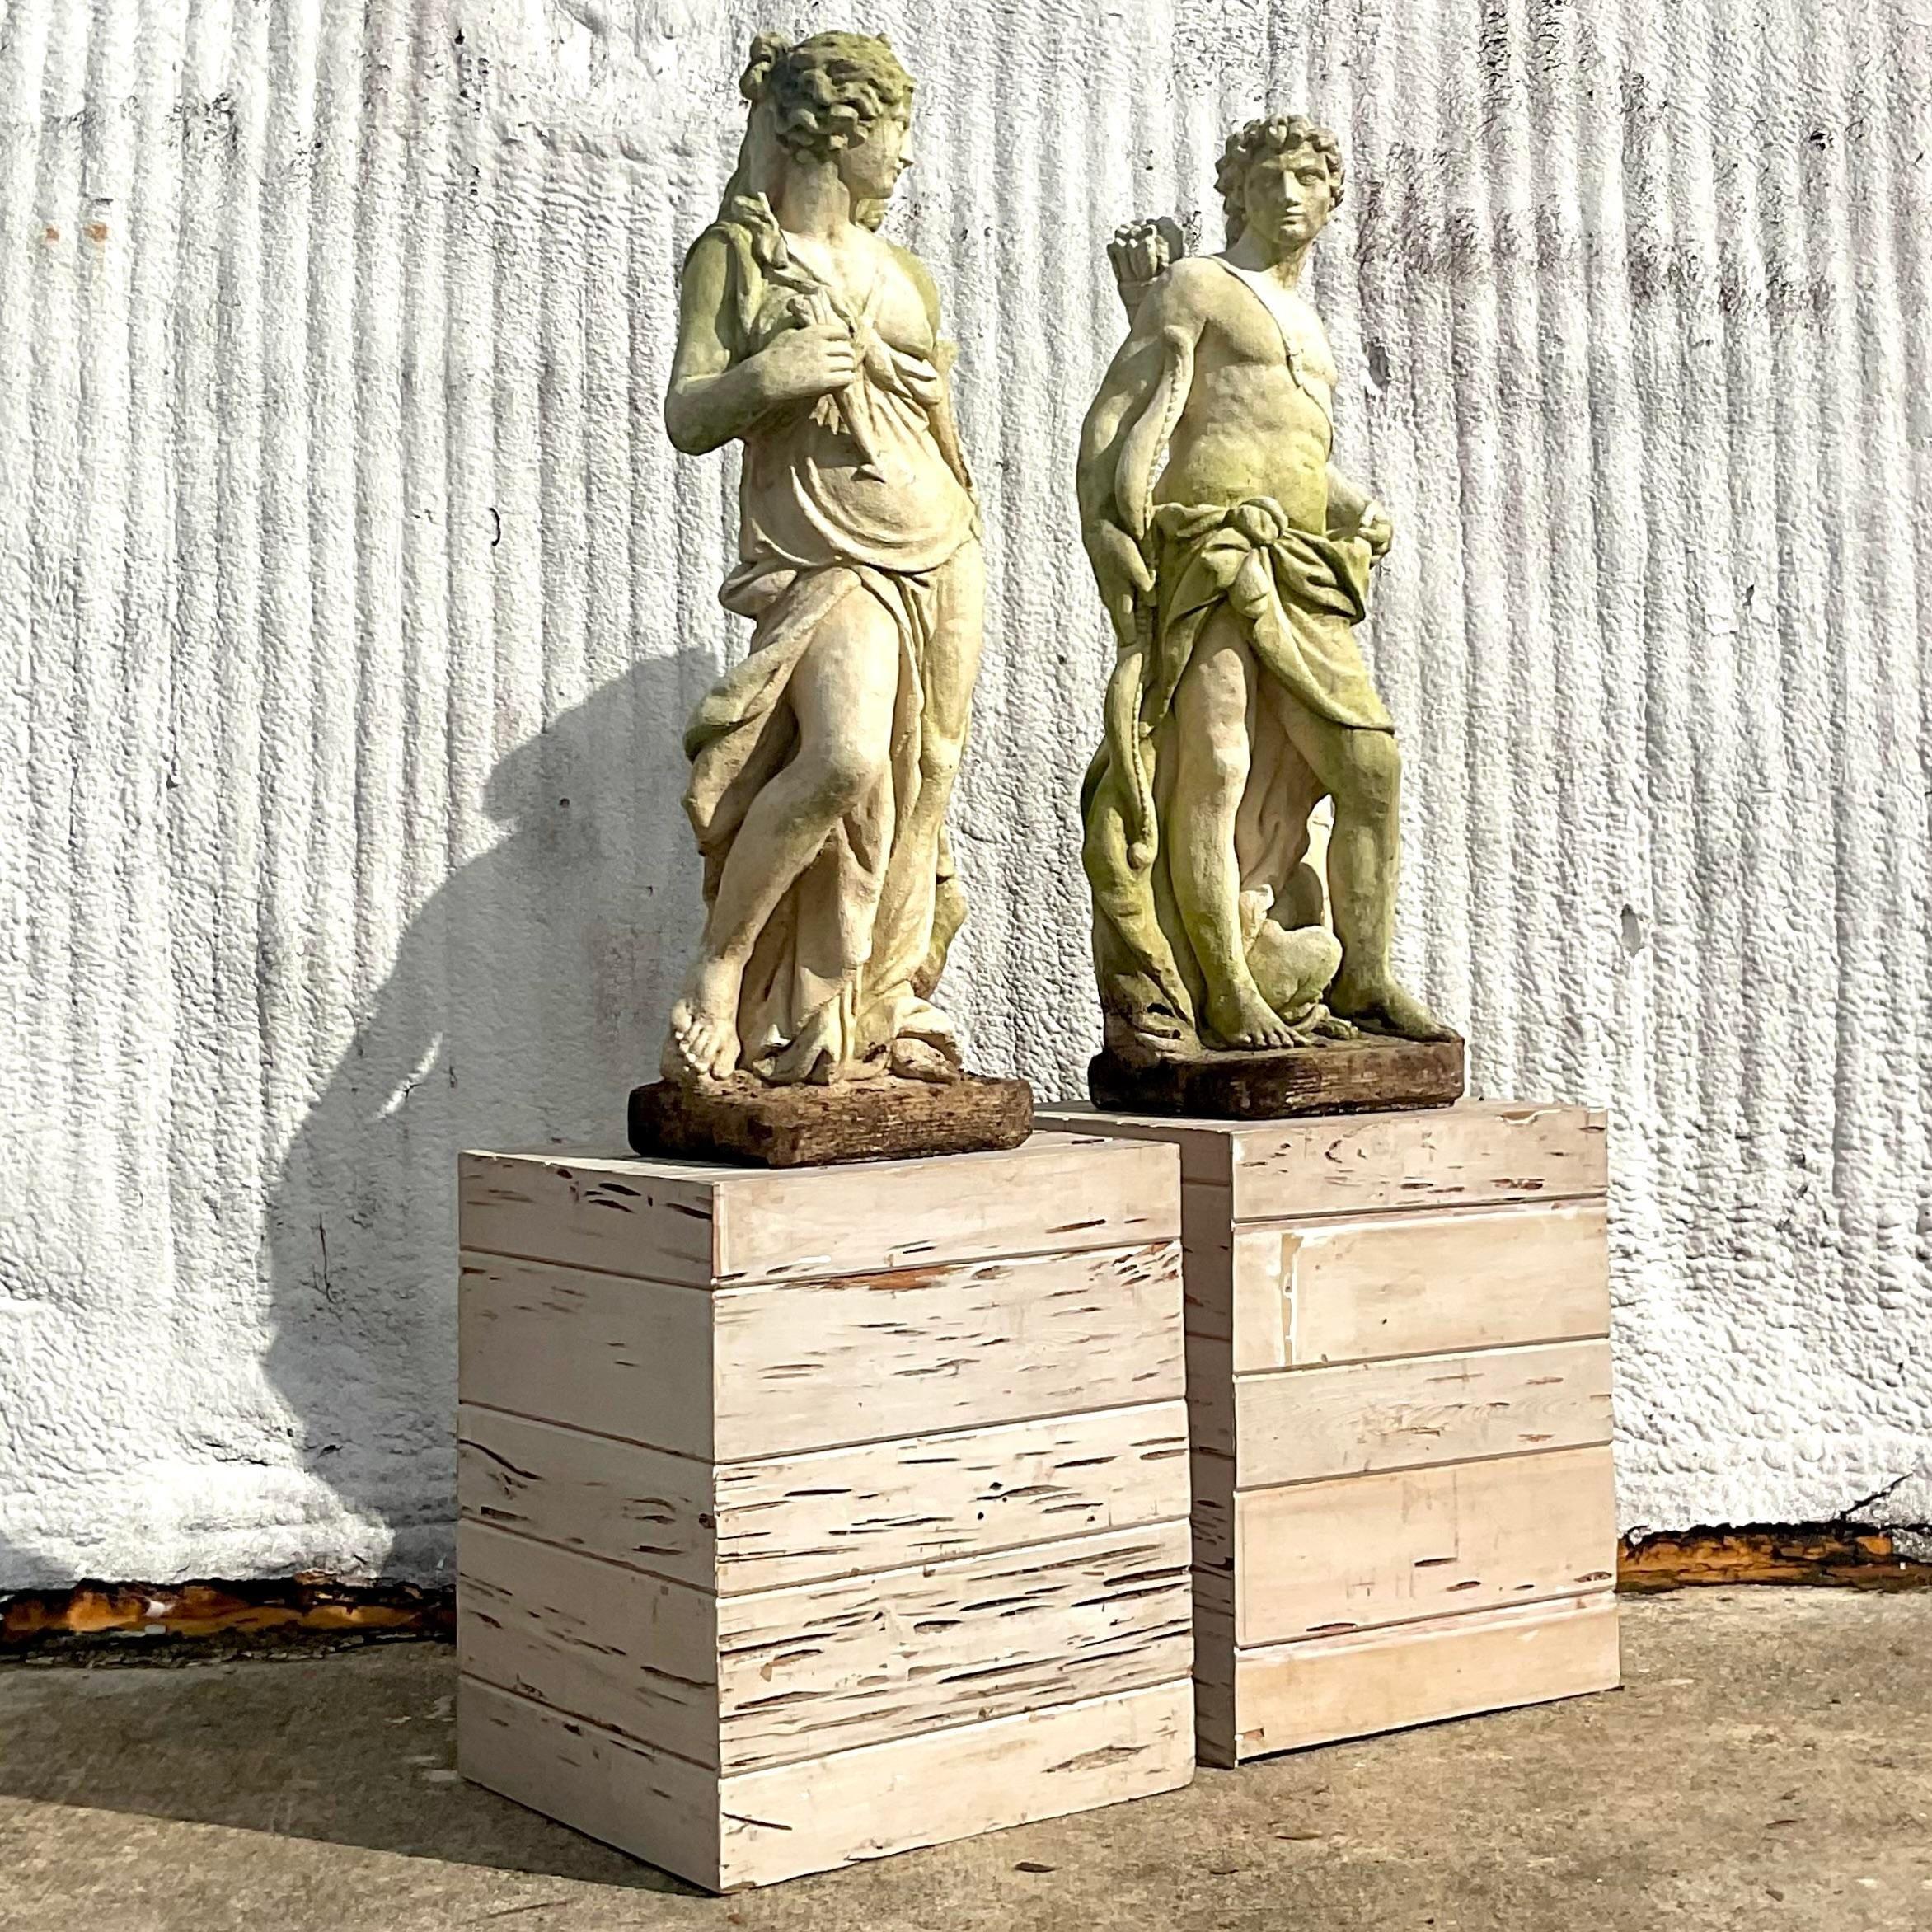 Vintage Boho Cast Concrete Diana and Acteon Statues on Cypress Plinths - Set of2 6